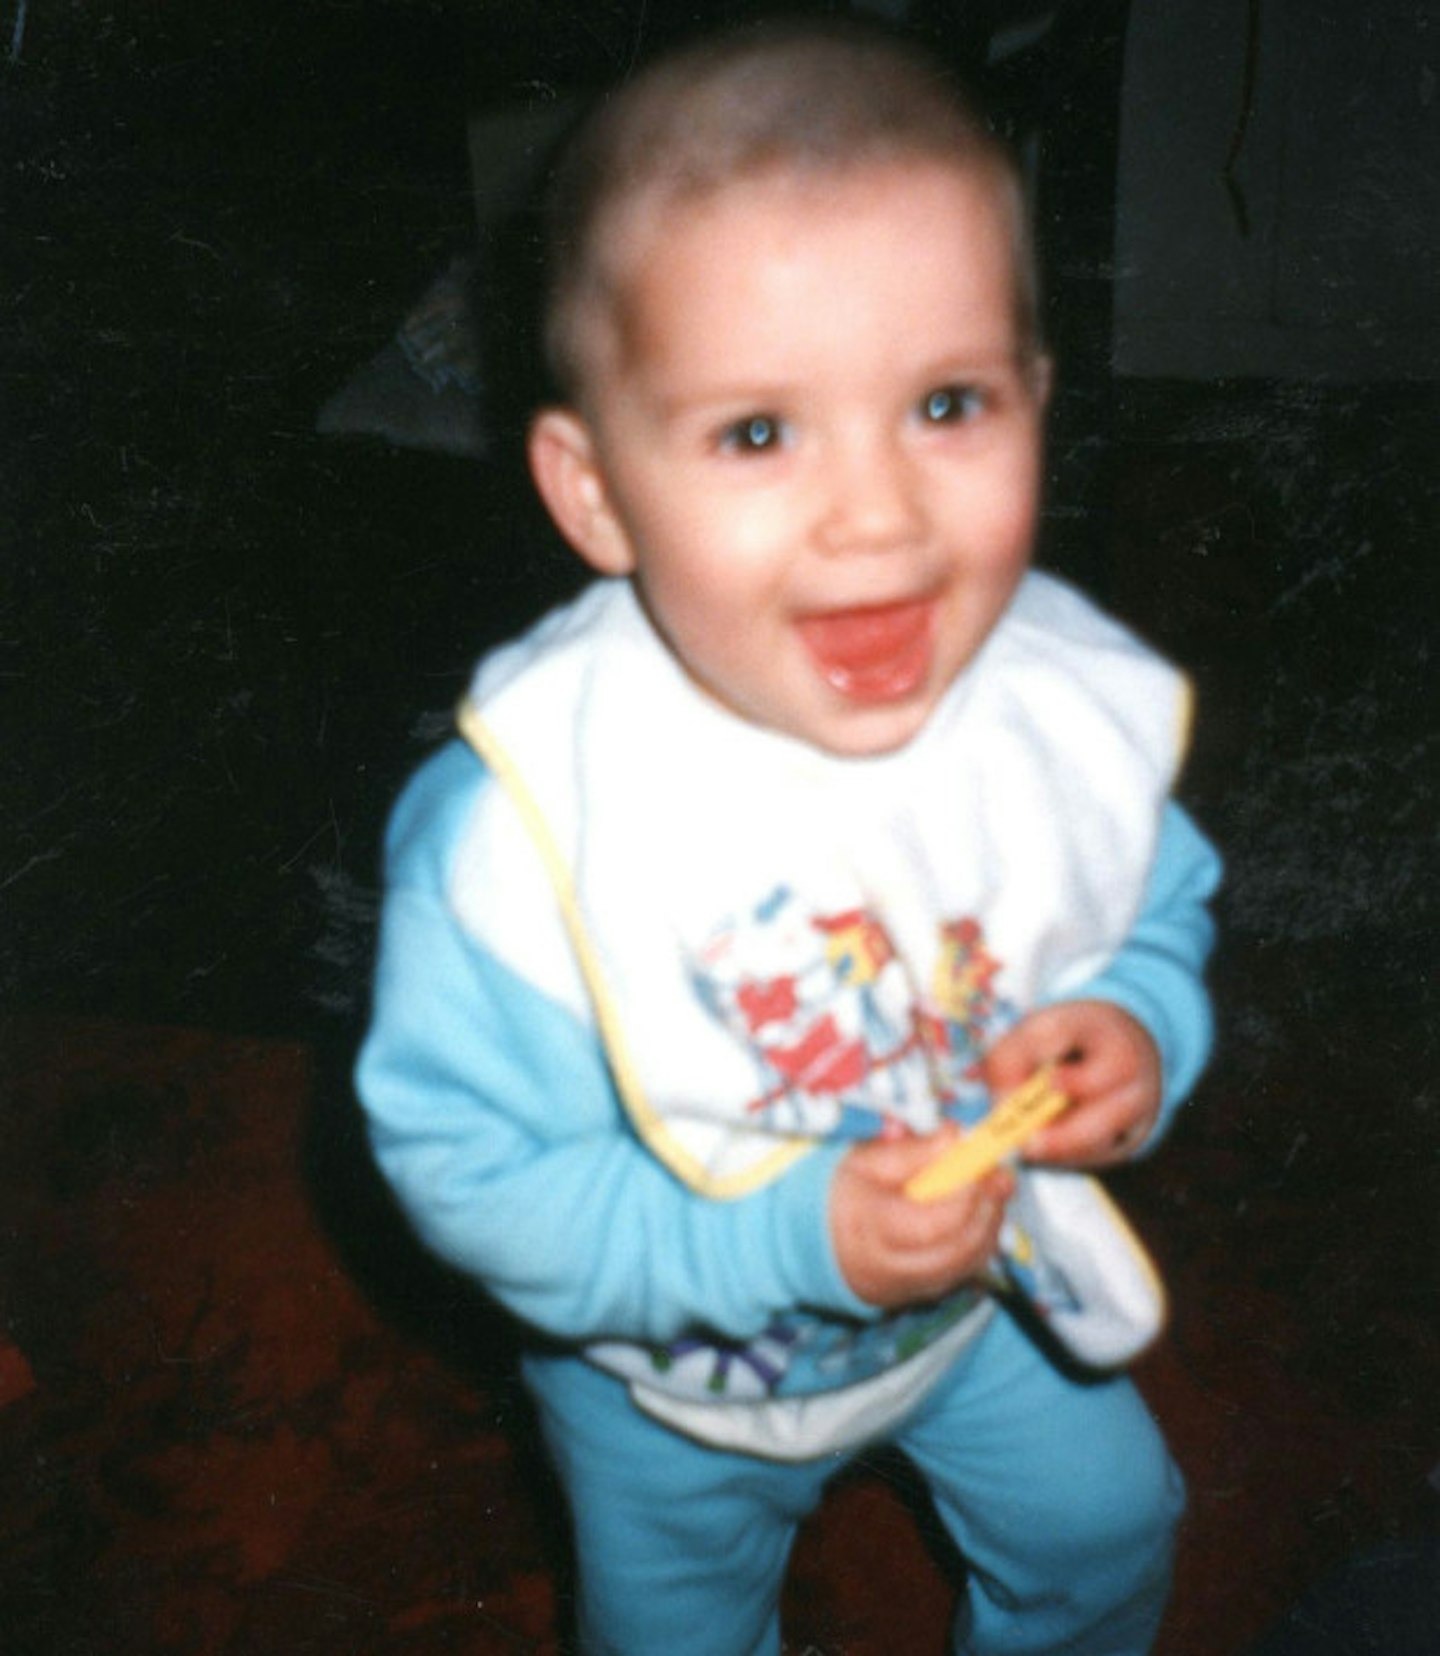 BONUS PICTURE: Zayn as a baby!